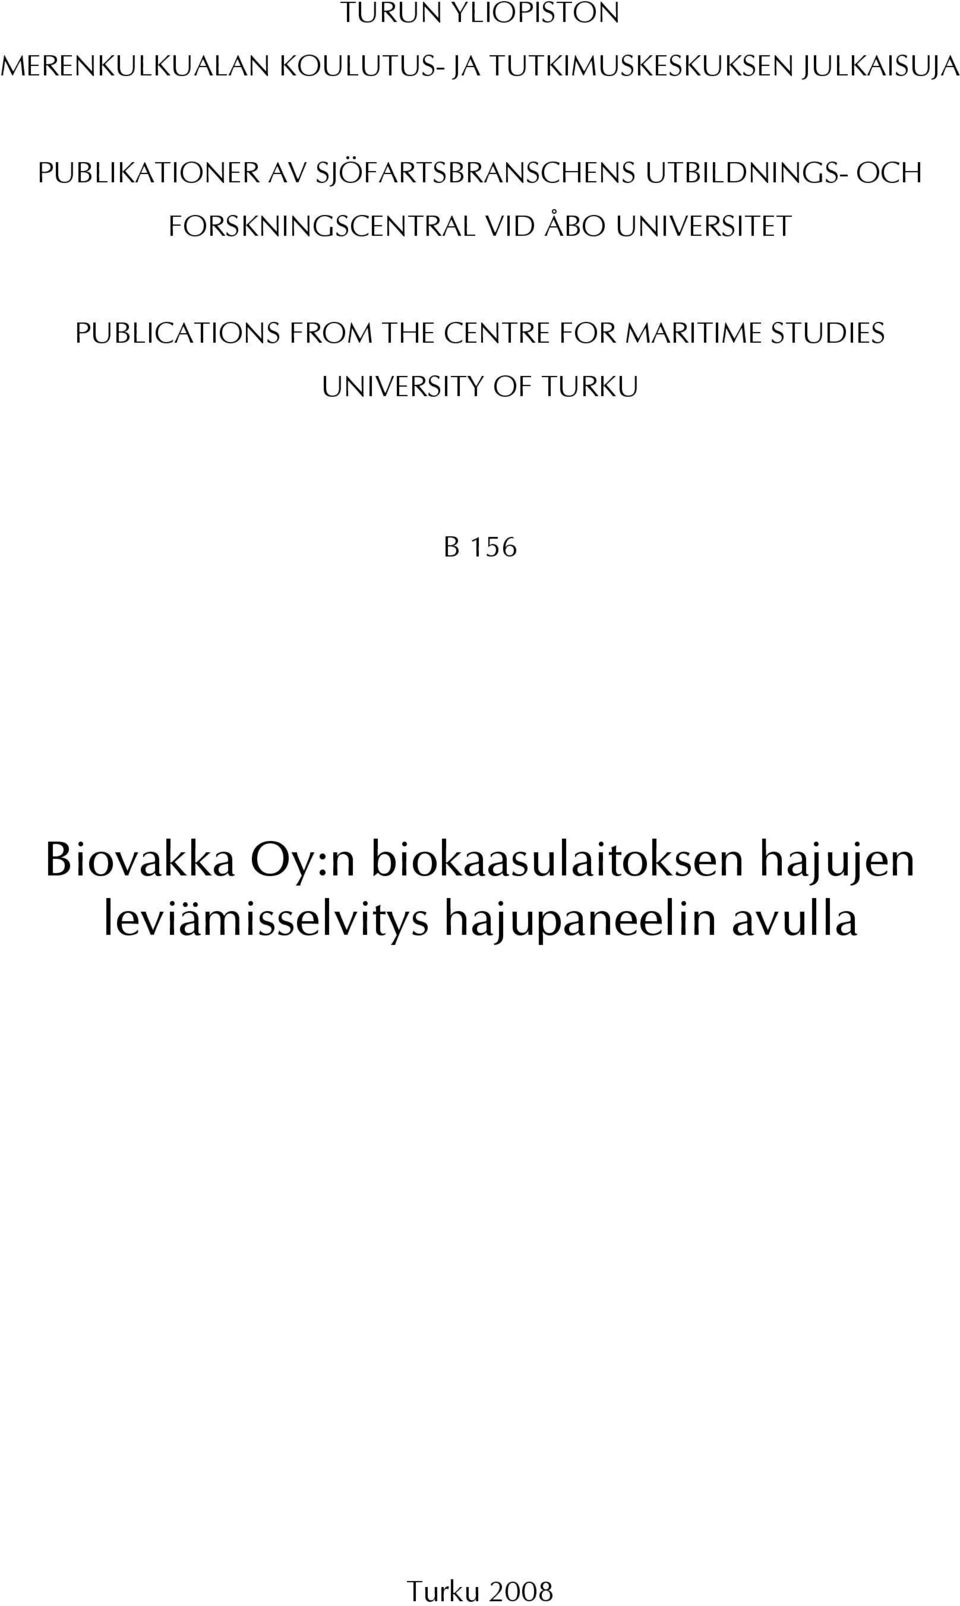 UNIVERSITET PUBLICATIONS FROM THE CENTRE FOR MARITIME STUDIES UNIVERSITY OF TURKU